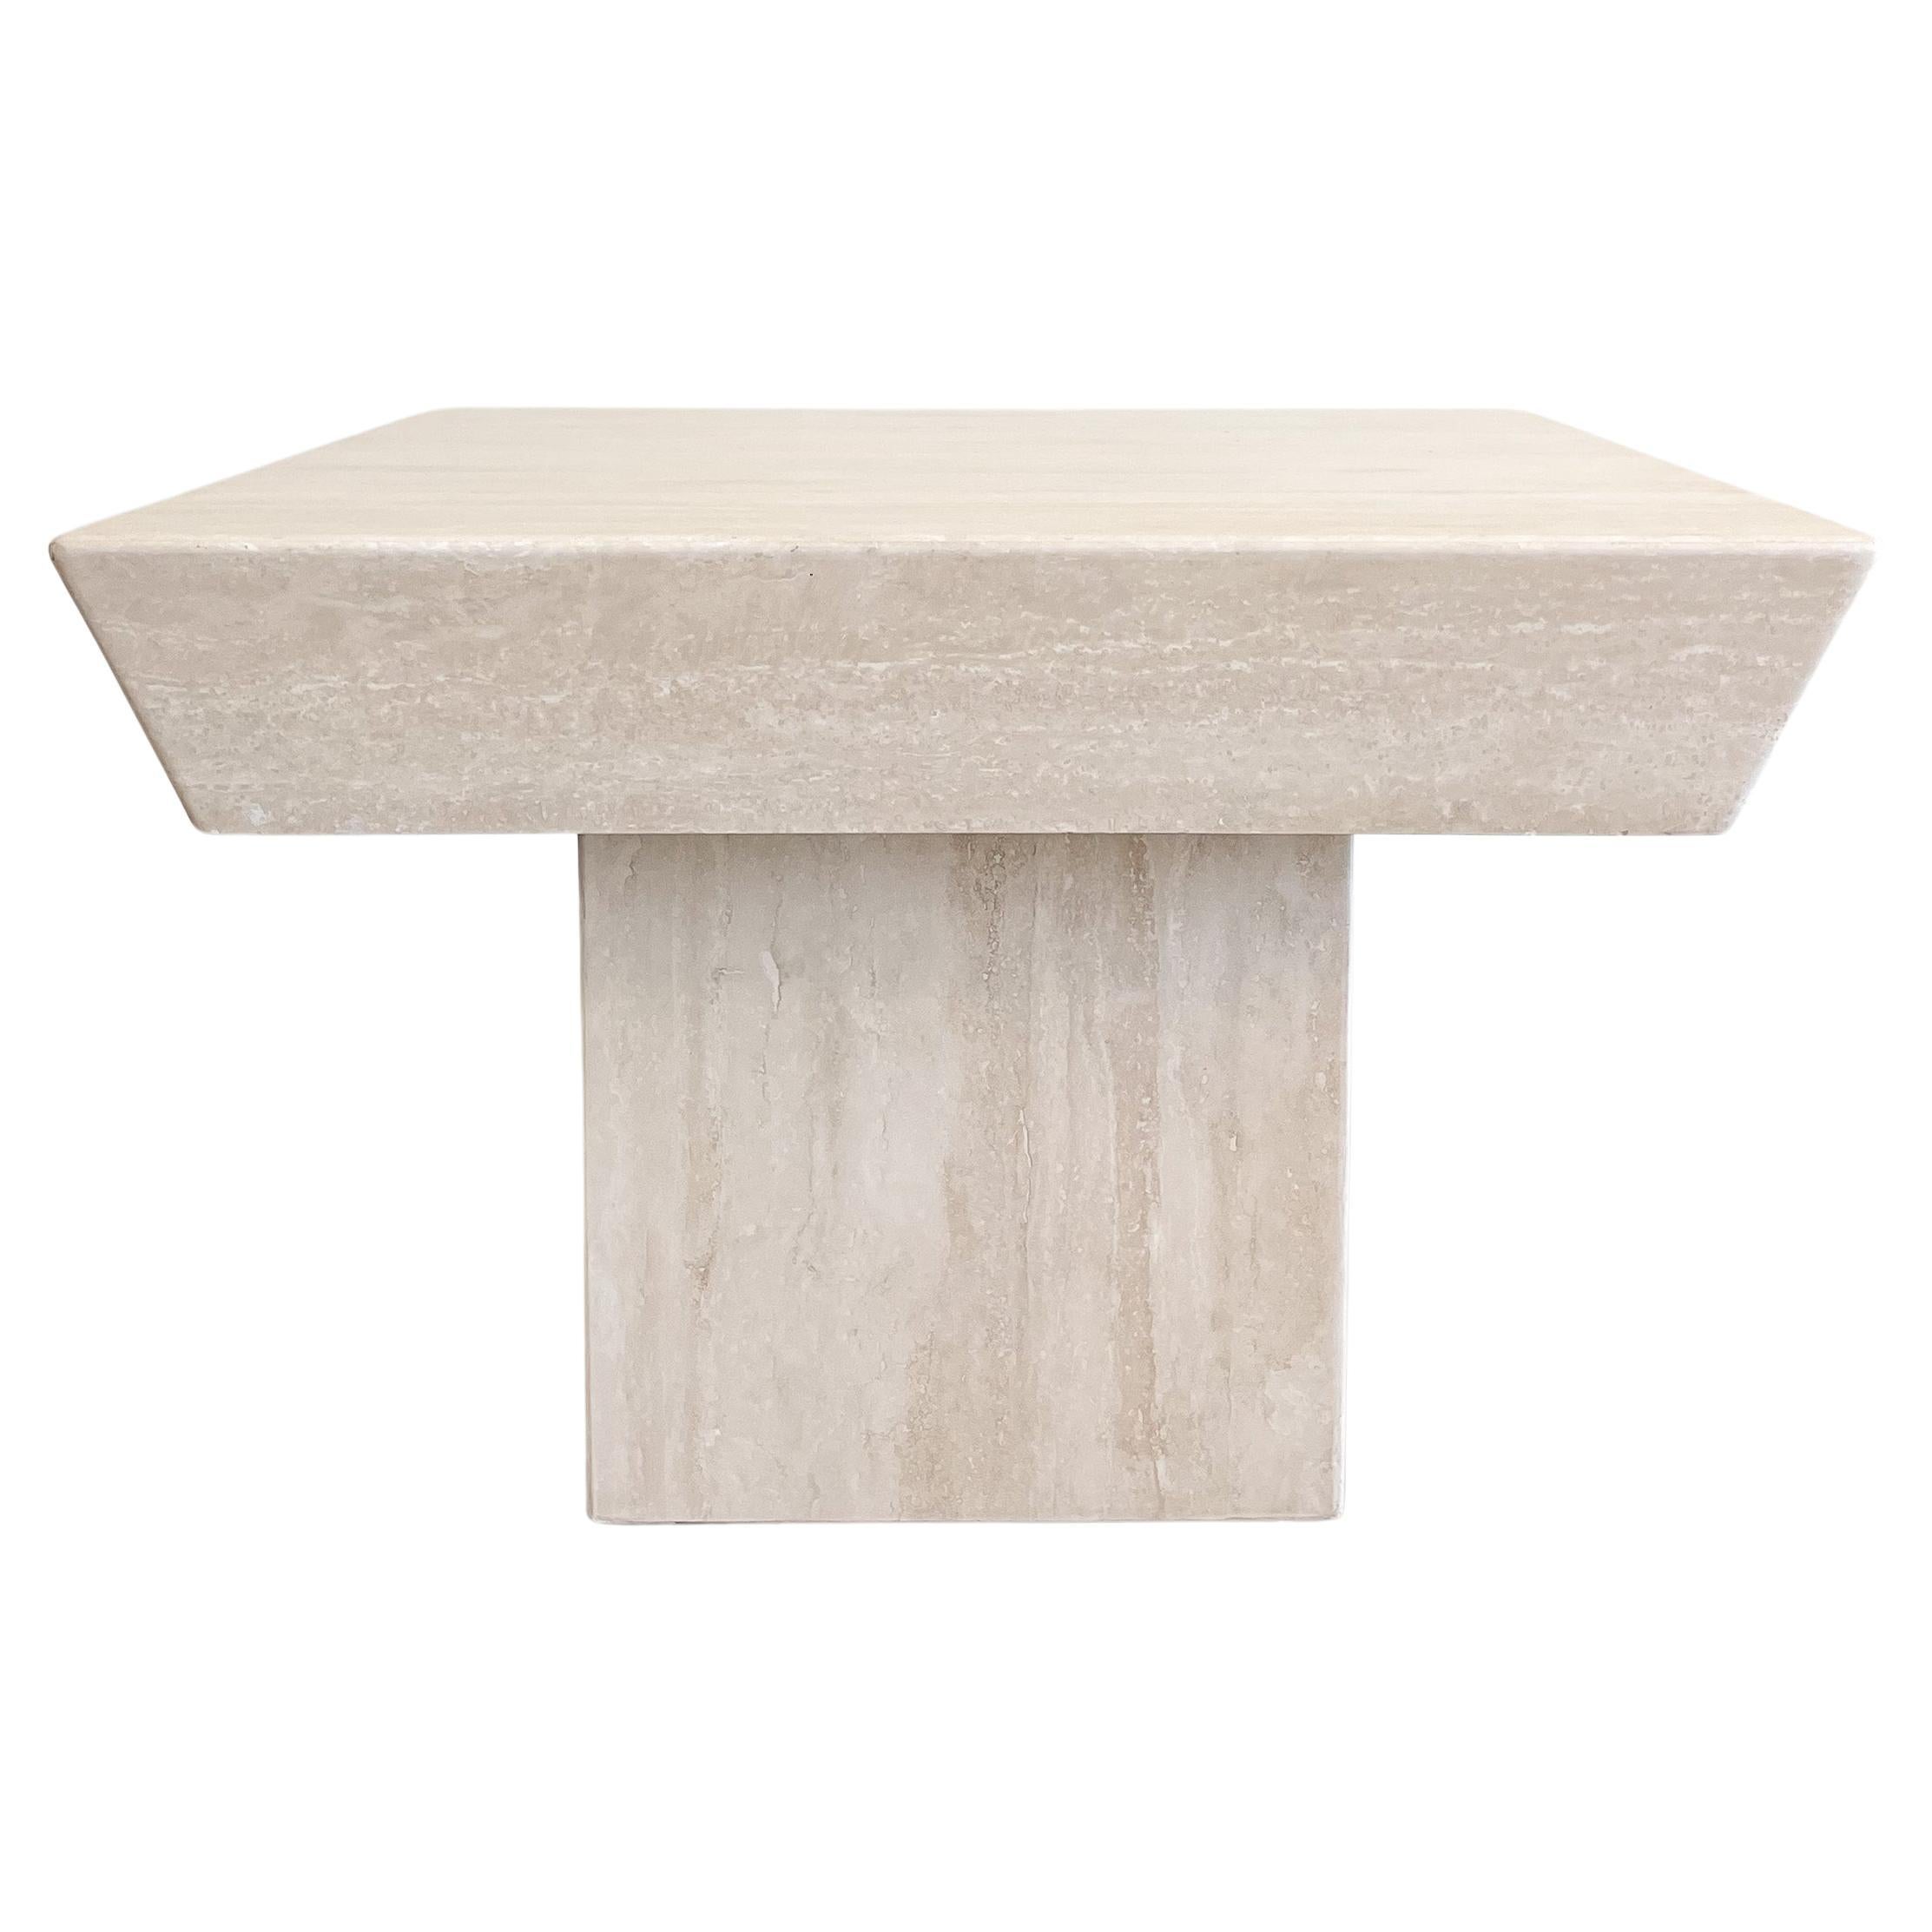 Vintage Square Travertine Stone End Table Marble Postmodern MCM Retro Minimal